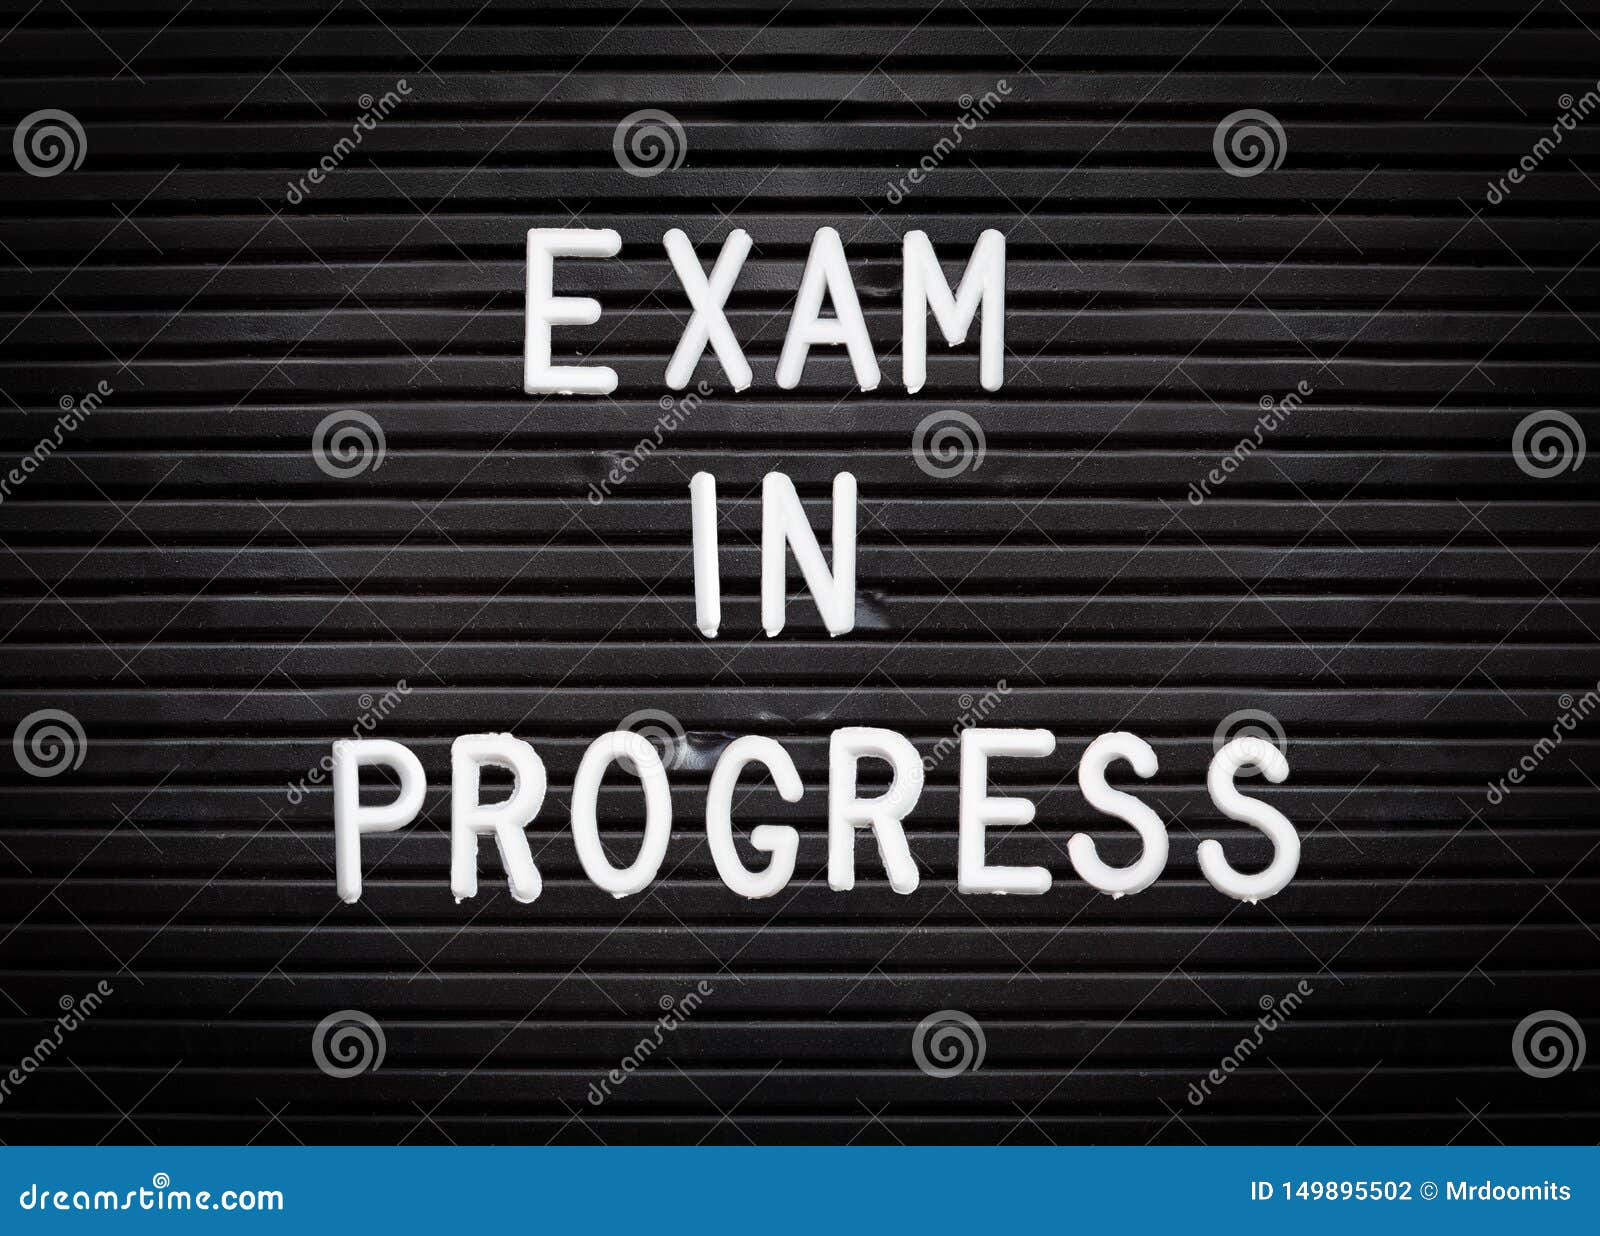 exam in progress sign